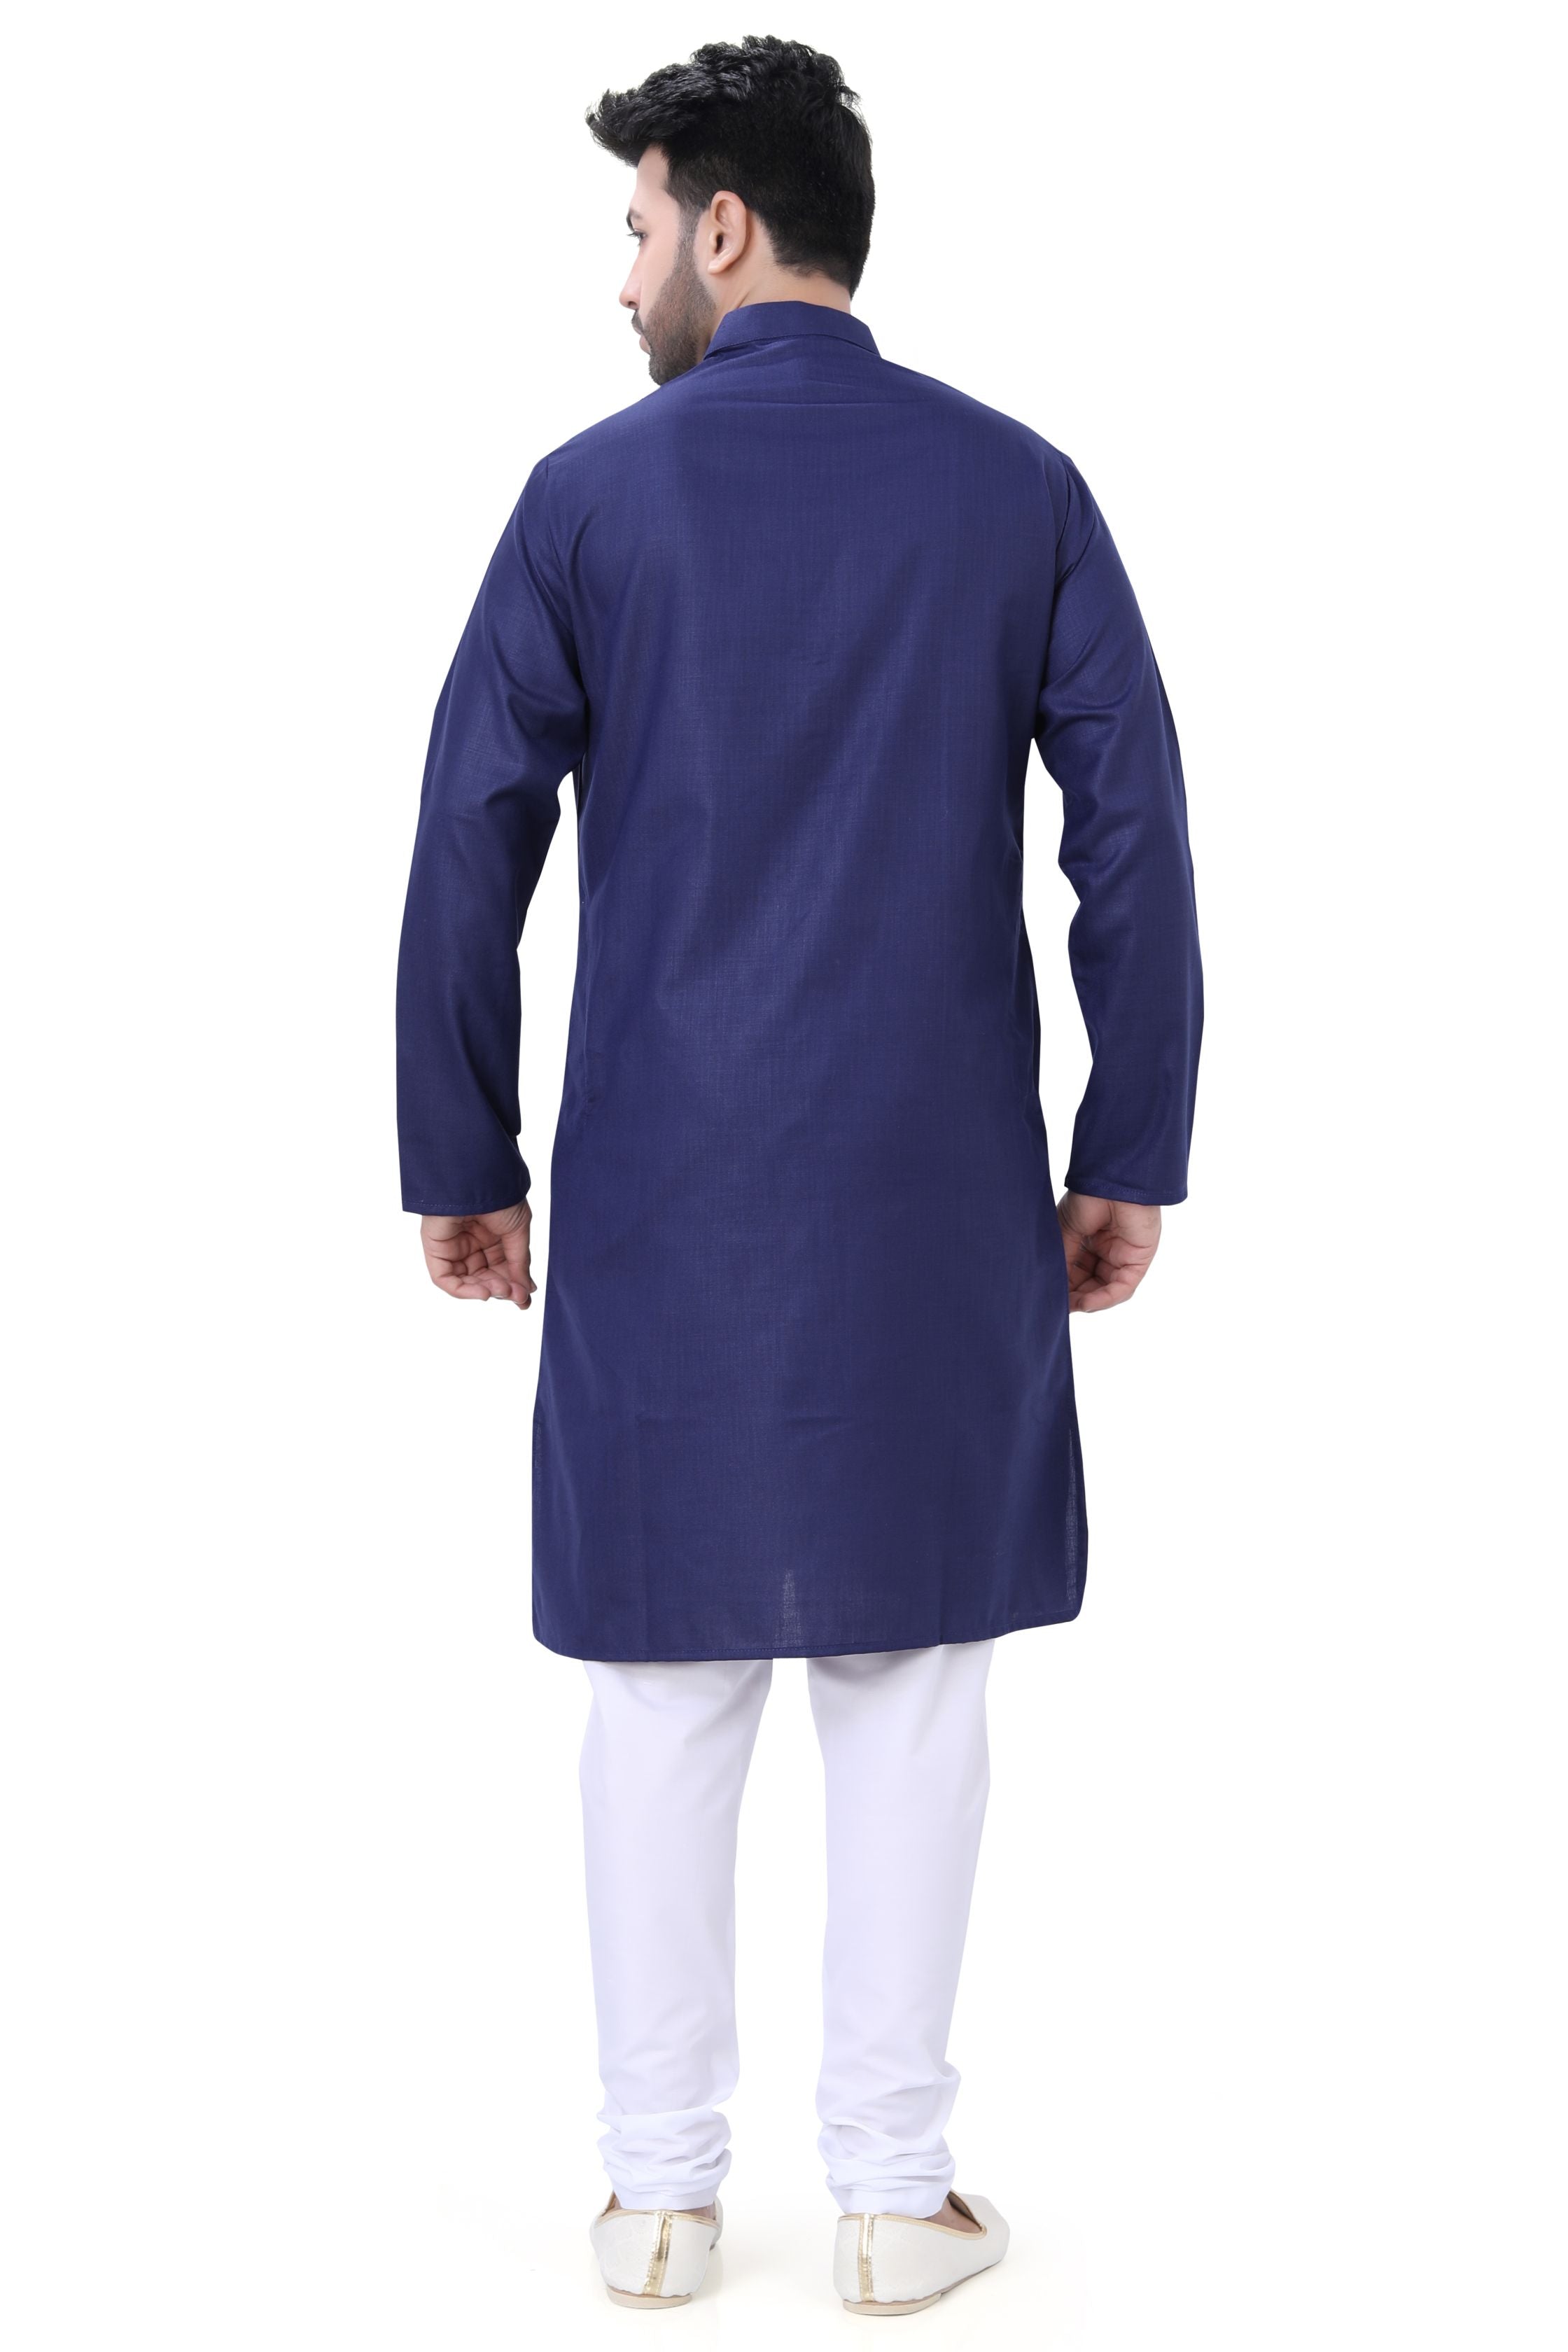 Plain Cotton Kurta in Navy Blue color - Premium kurta pajama from Dapper Ethnic - Just $29! Shop now at Dulhan Exclusives